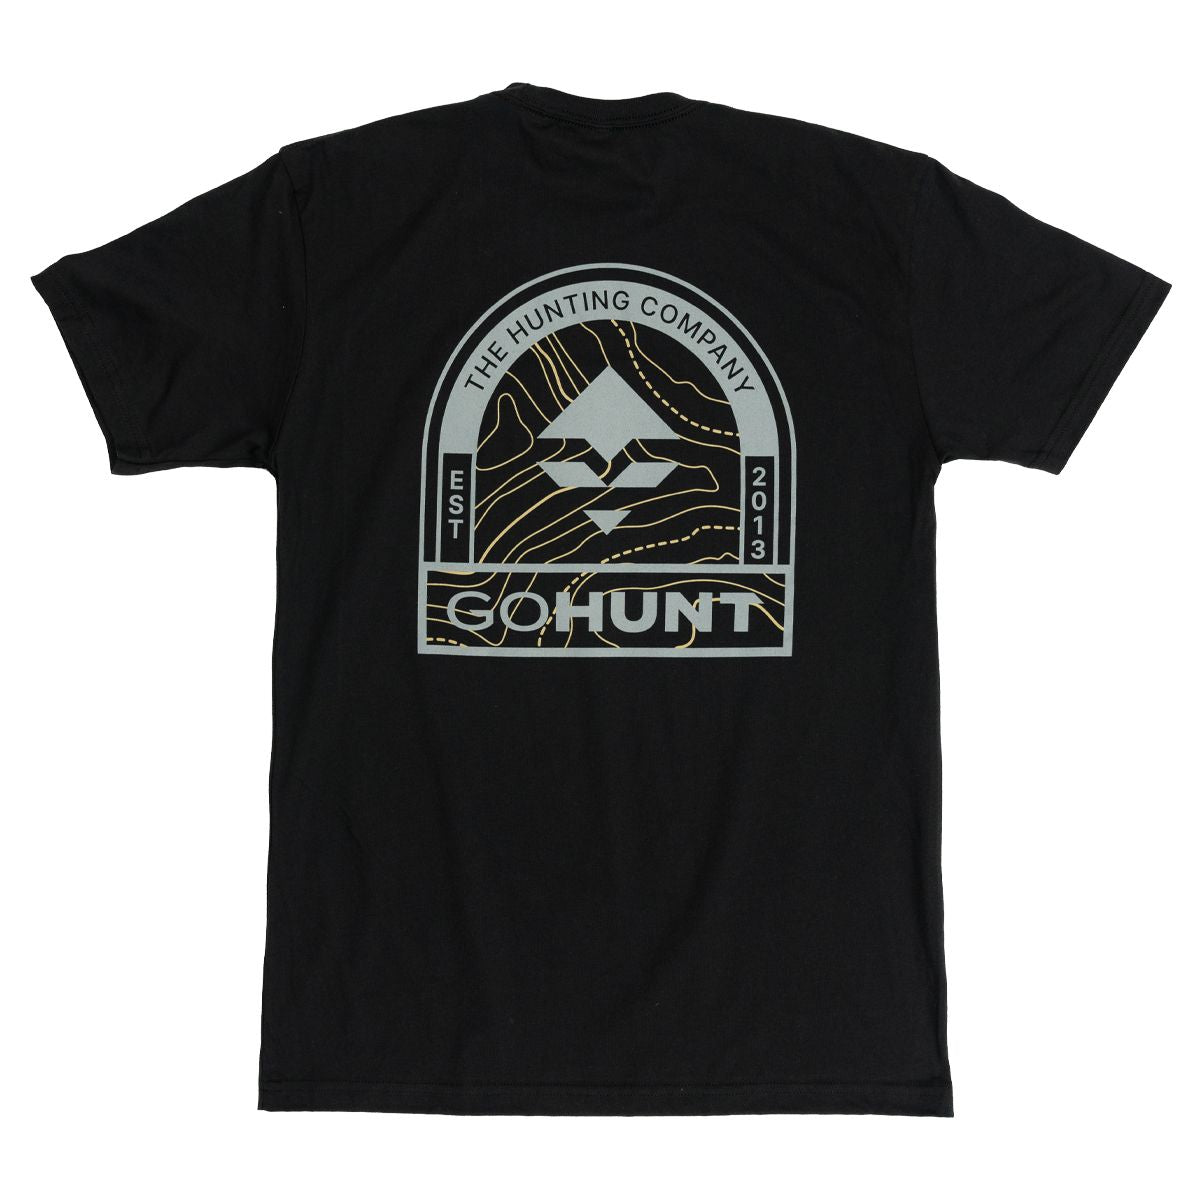 GOHUNT Elevation Tee in Black by GOHUNT | GOHUNT - GOHUNT Shop